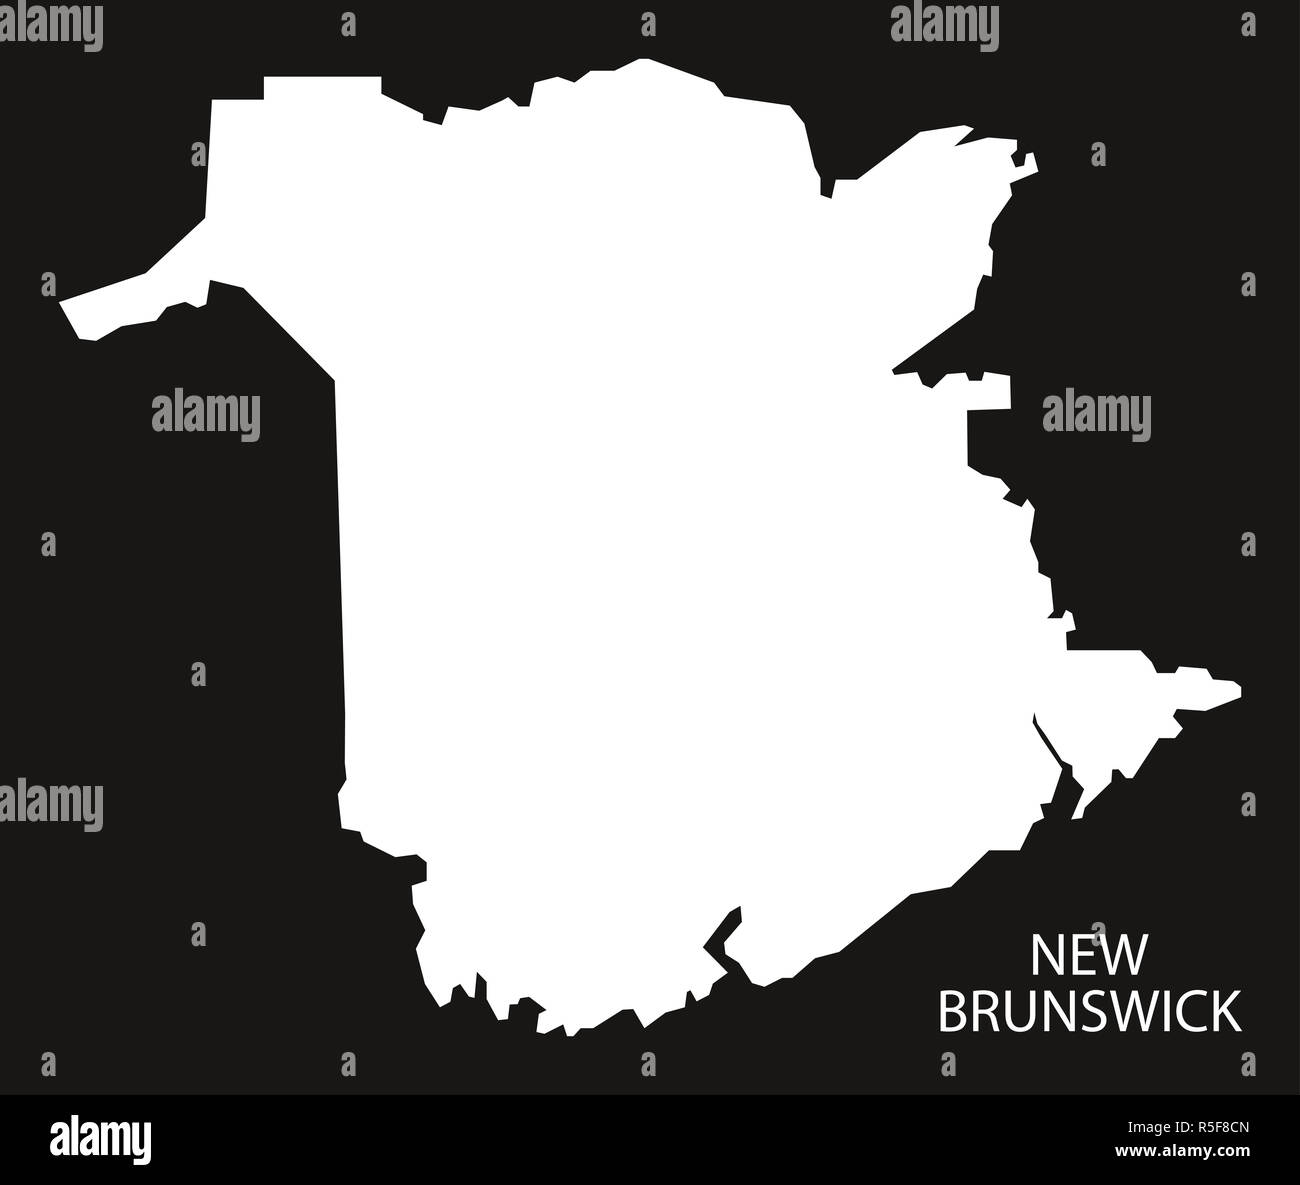 New Brunswick Canada map black inverted silhouette illustration shape Stock Photo